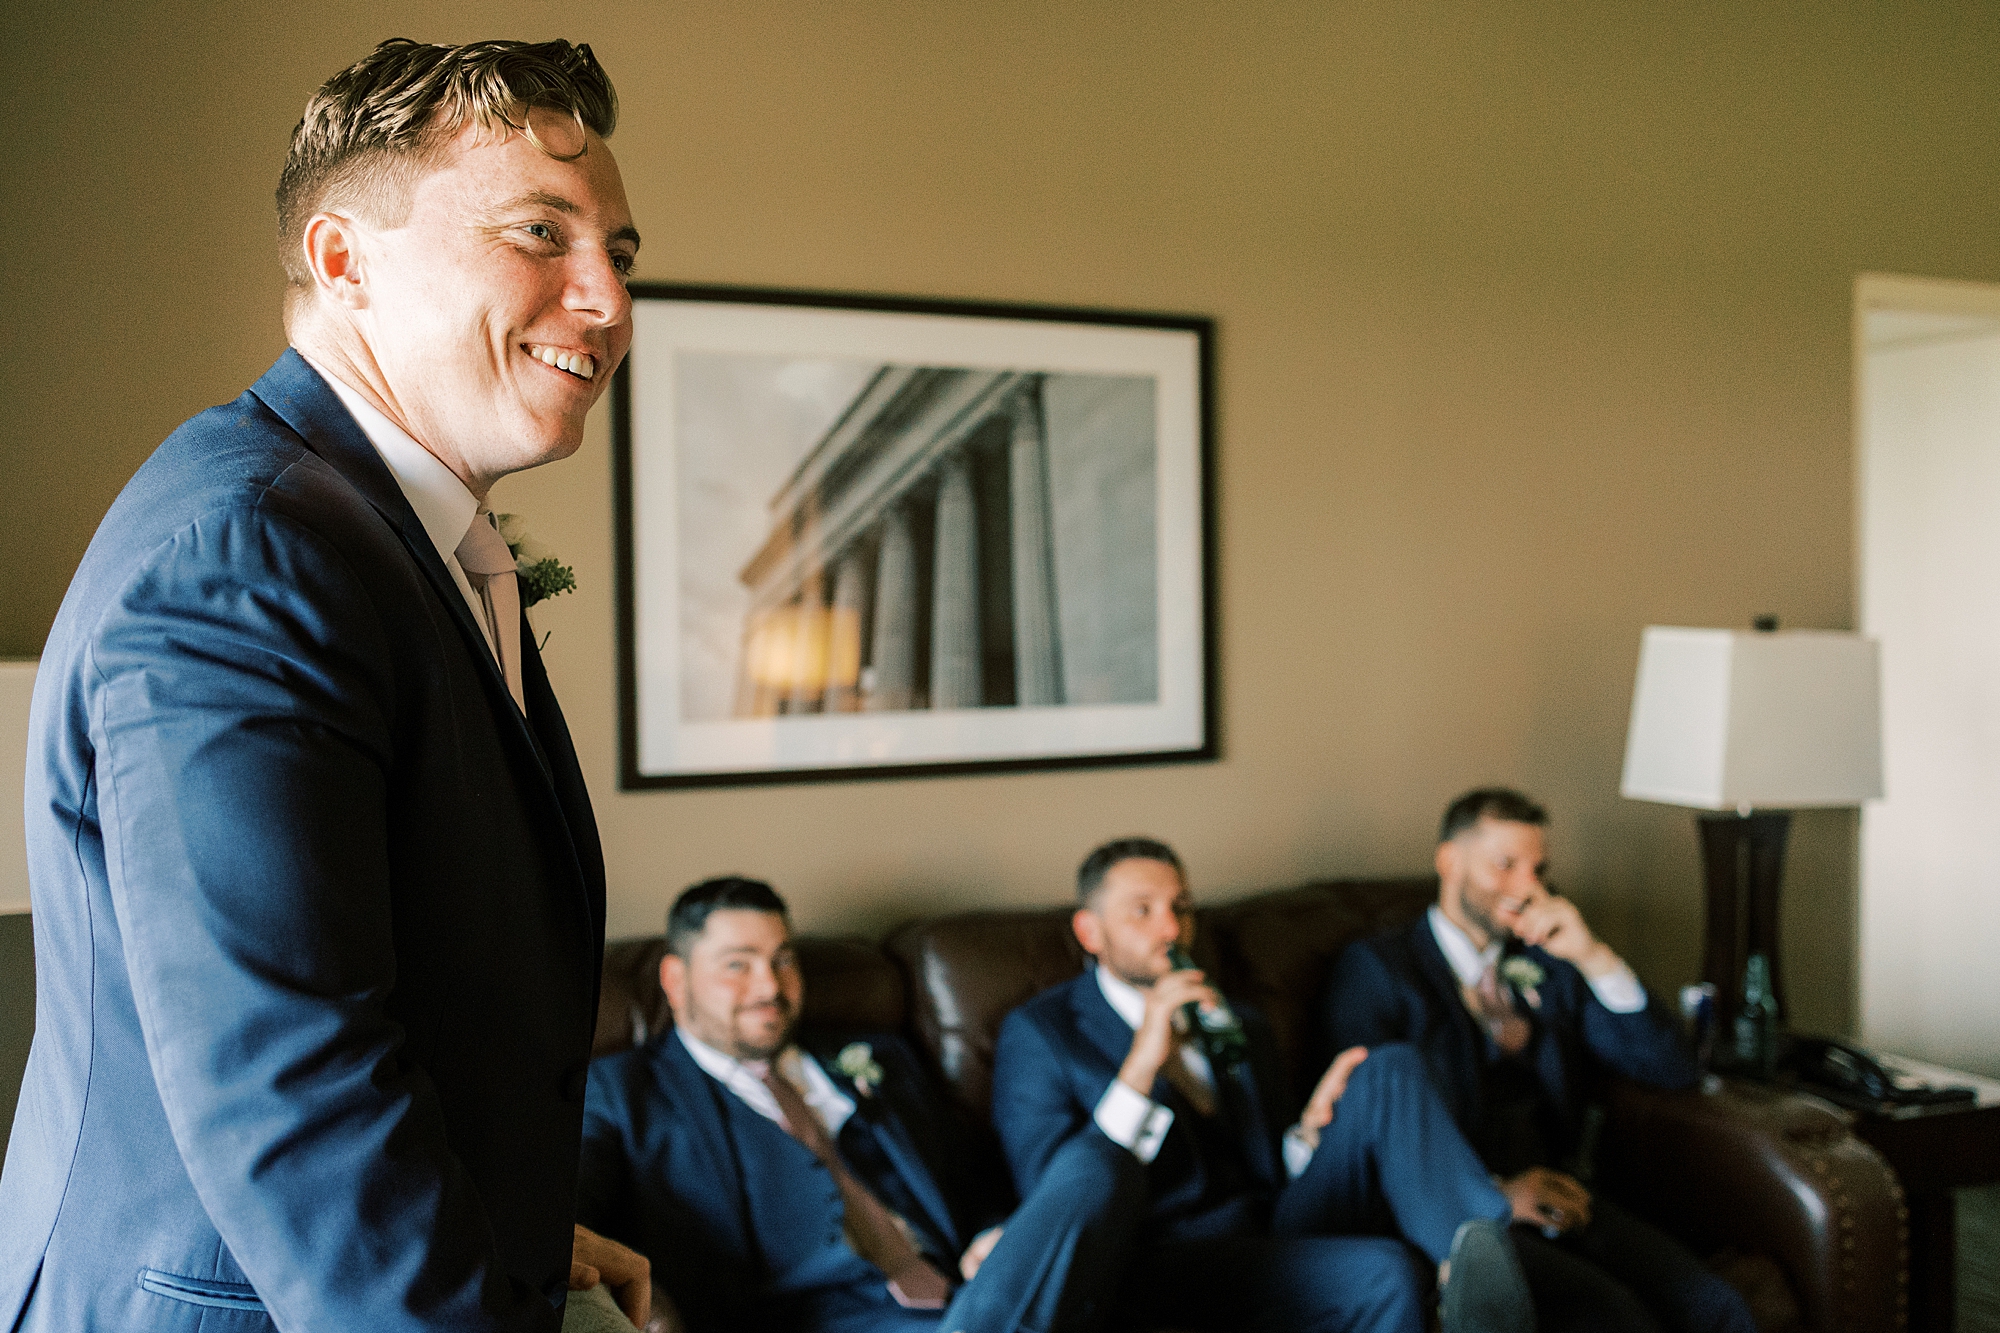 groom laughs with groomsmen in navy suits